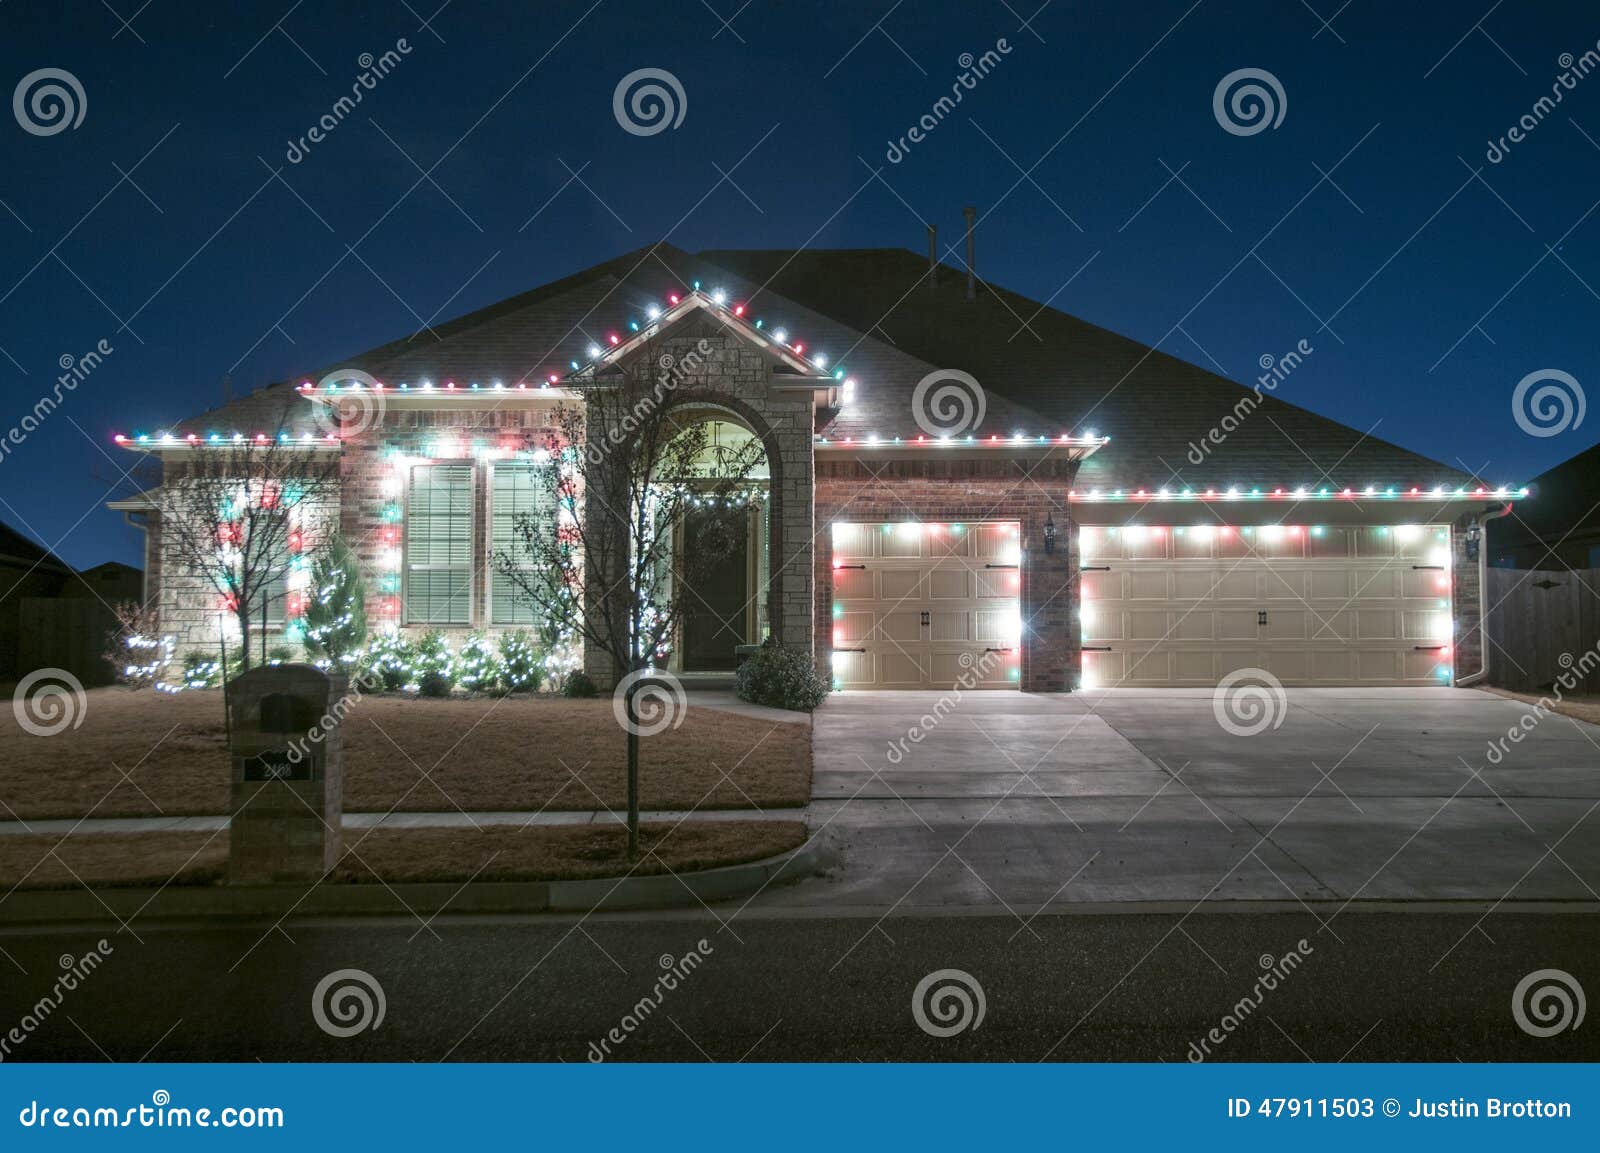 christmas lights outside on a home